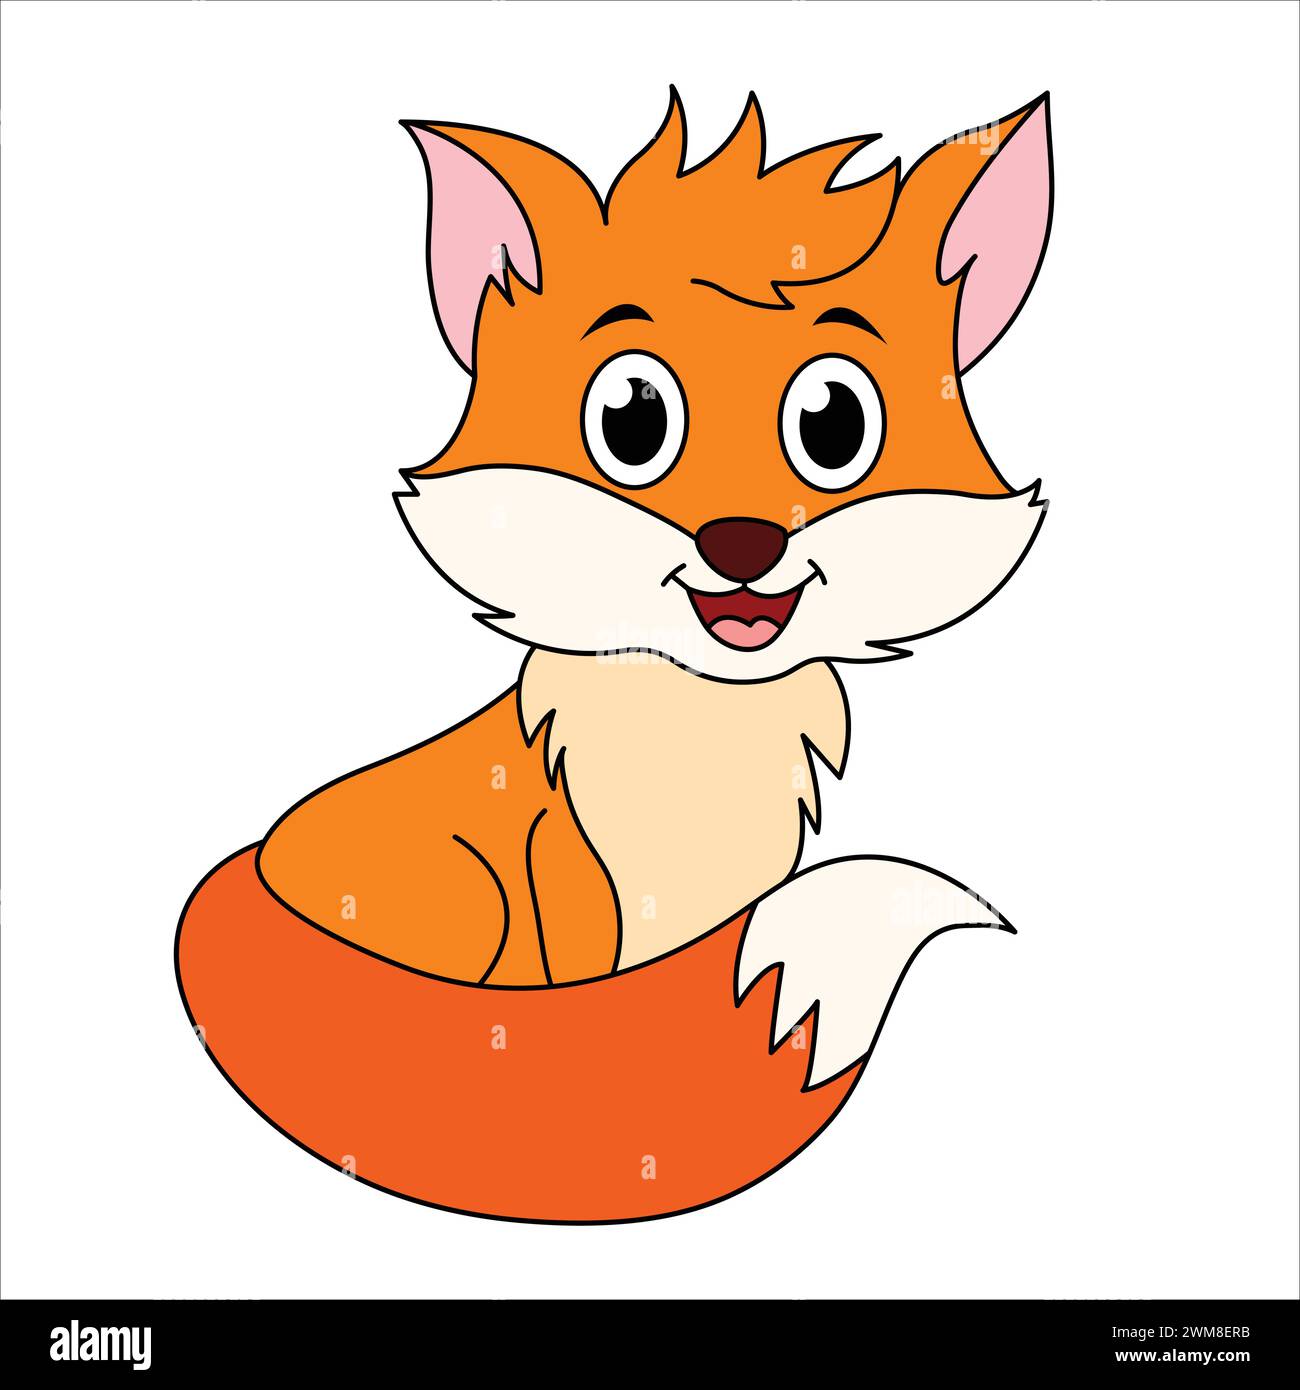 Cute Fox Cartoon Sitting. Kawaii Fox Cub Illustration For Children. Forest Animal Background Stock Vector